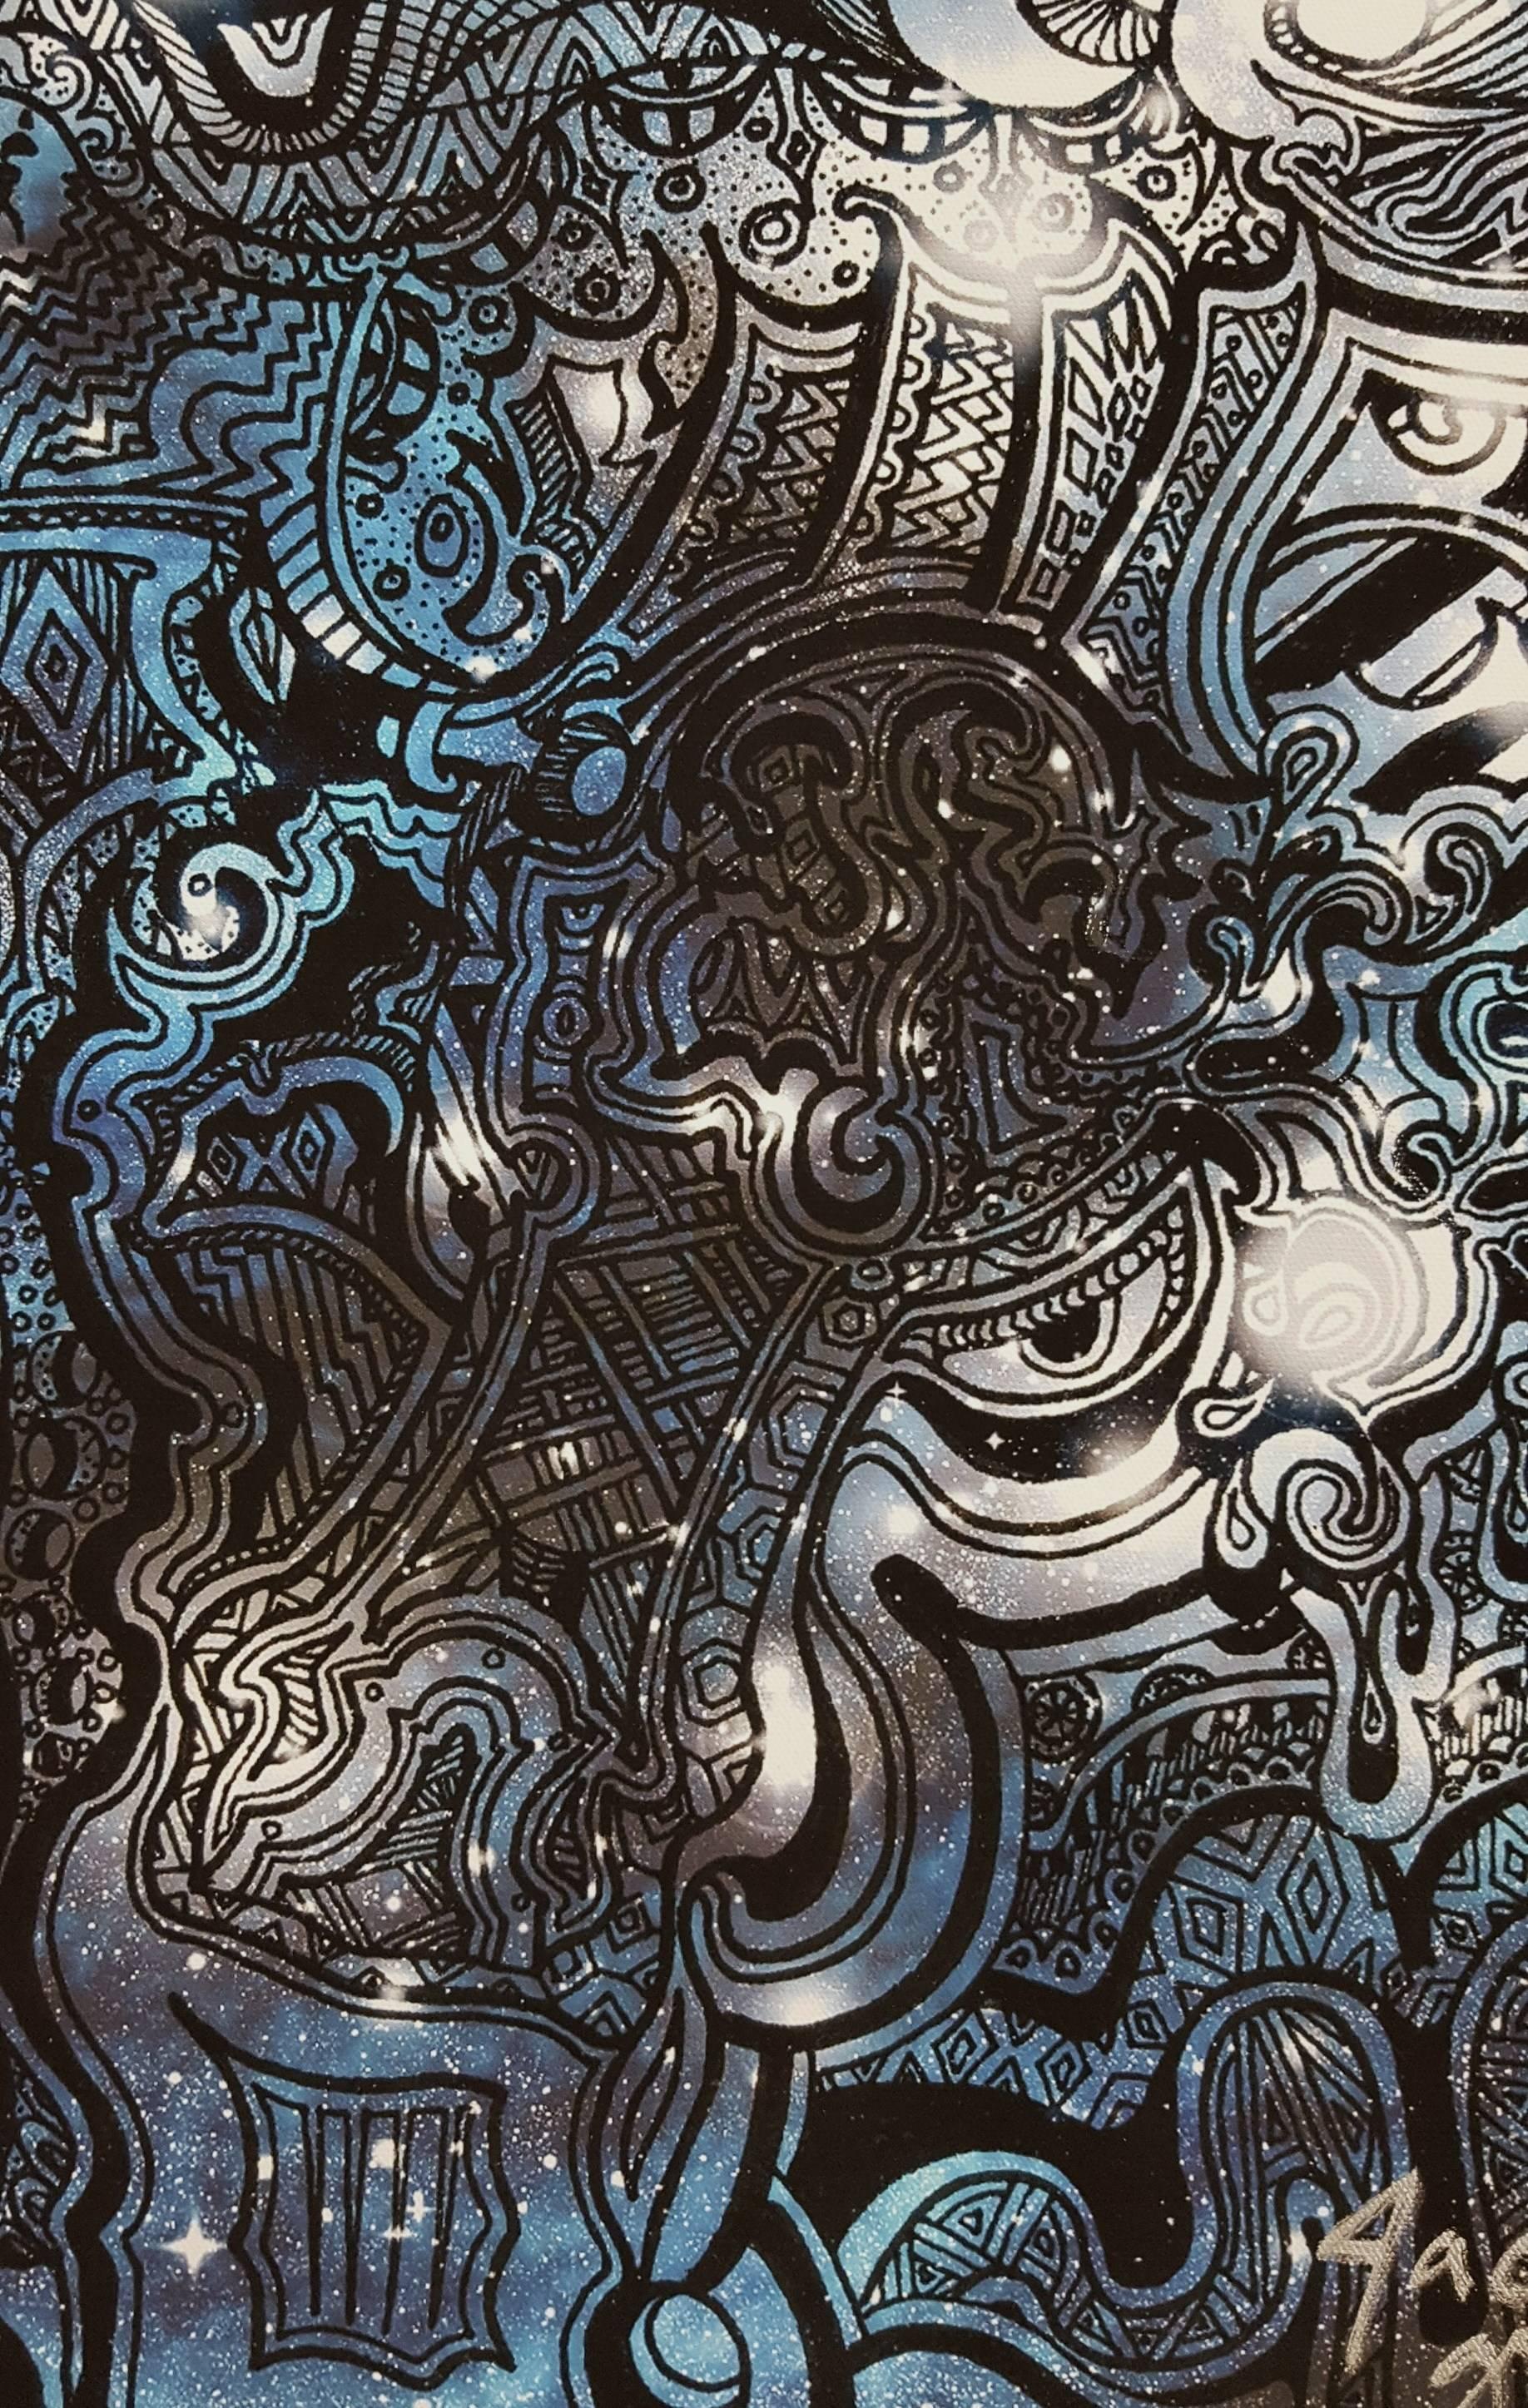 Samurai (Blue) - Contemporary Print by Jack Graves III